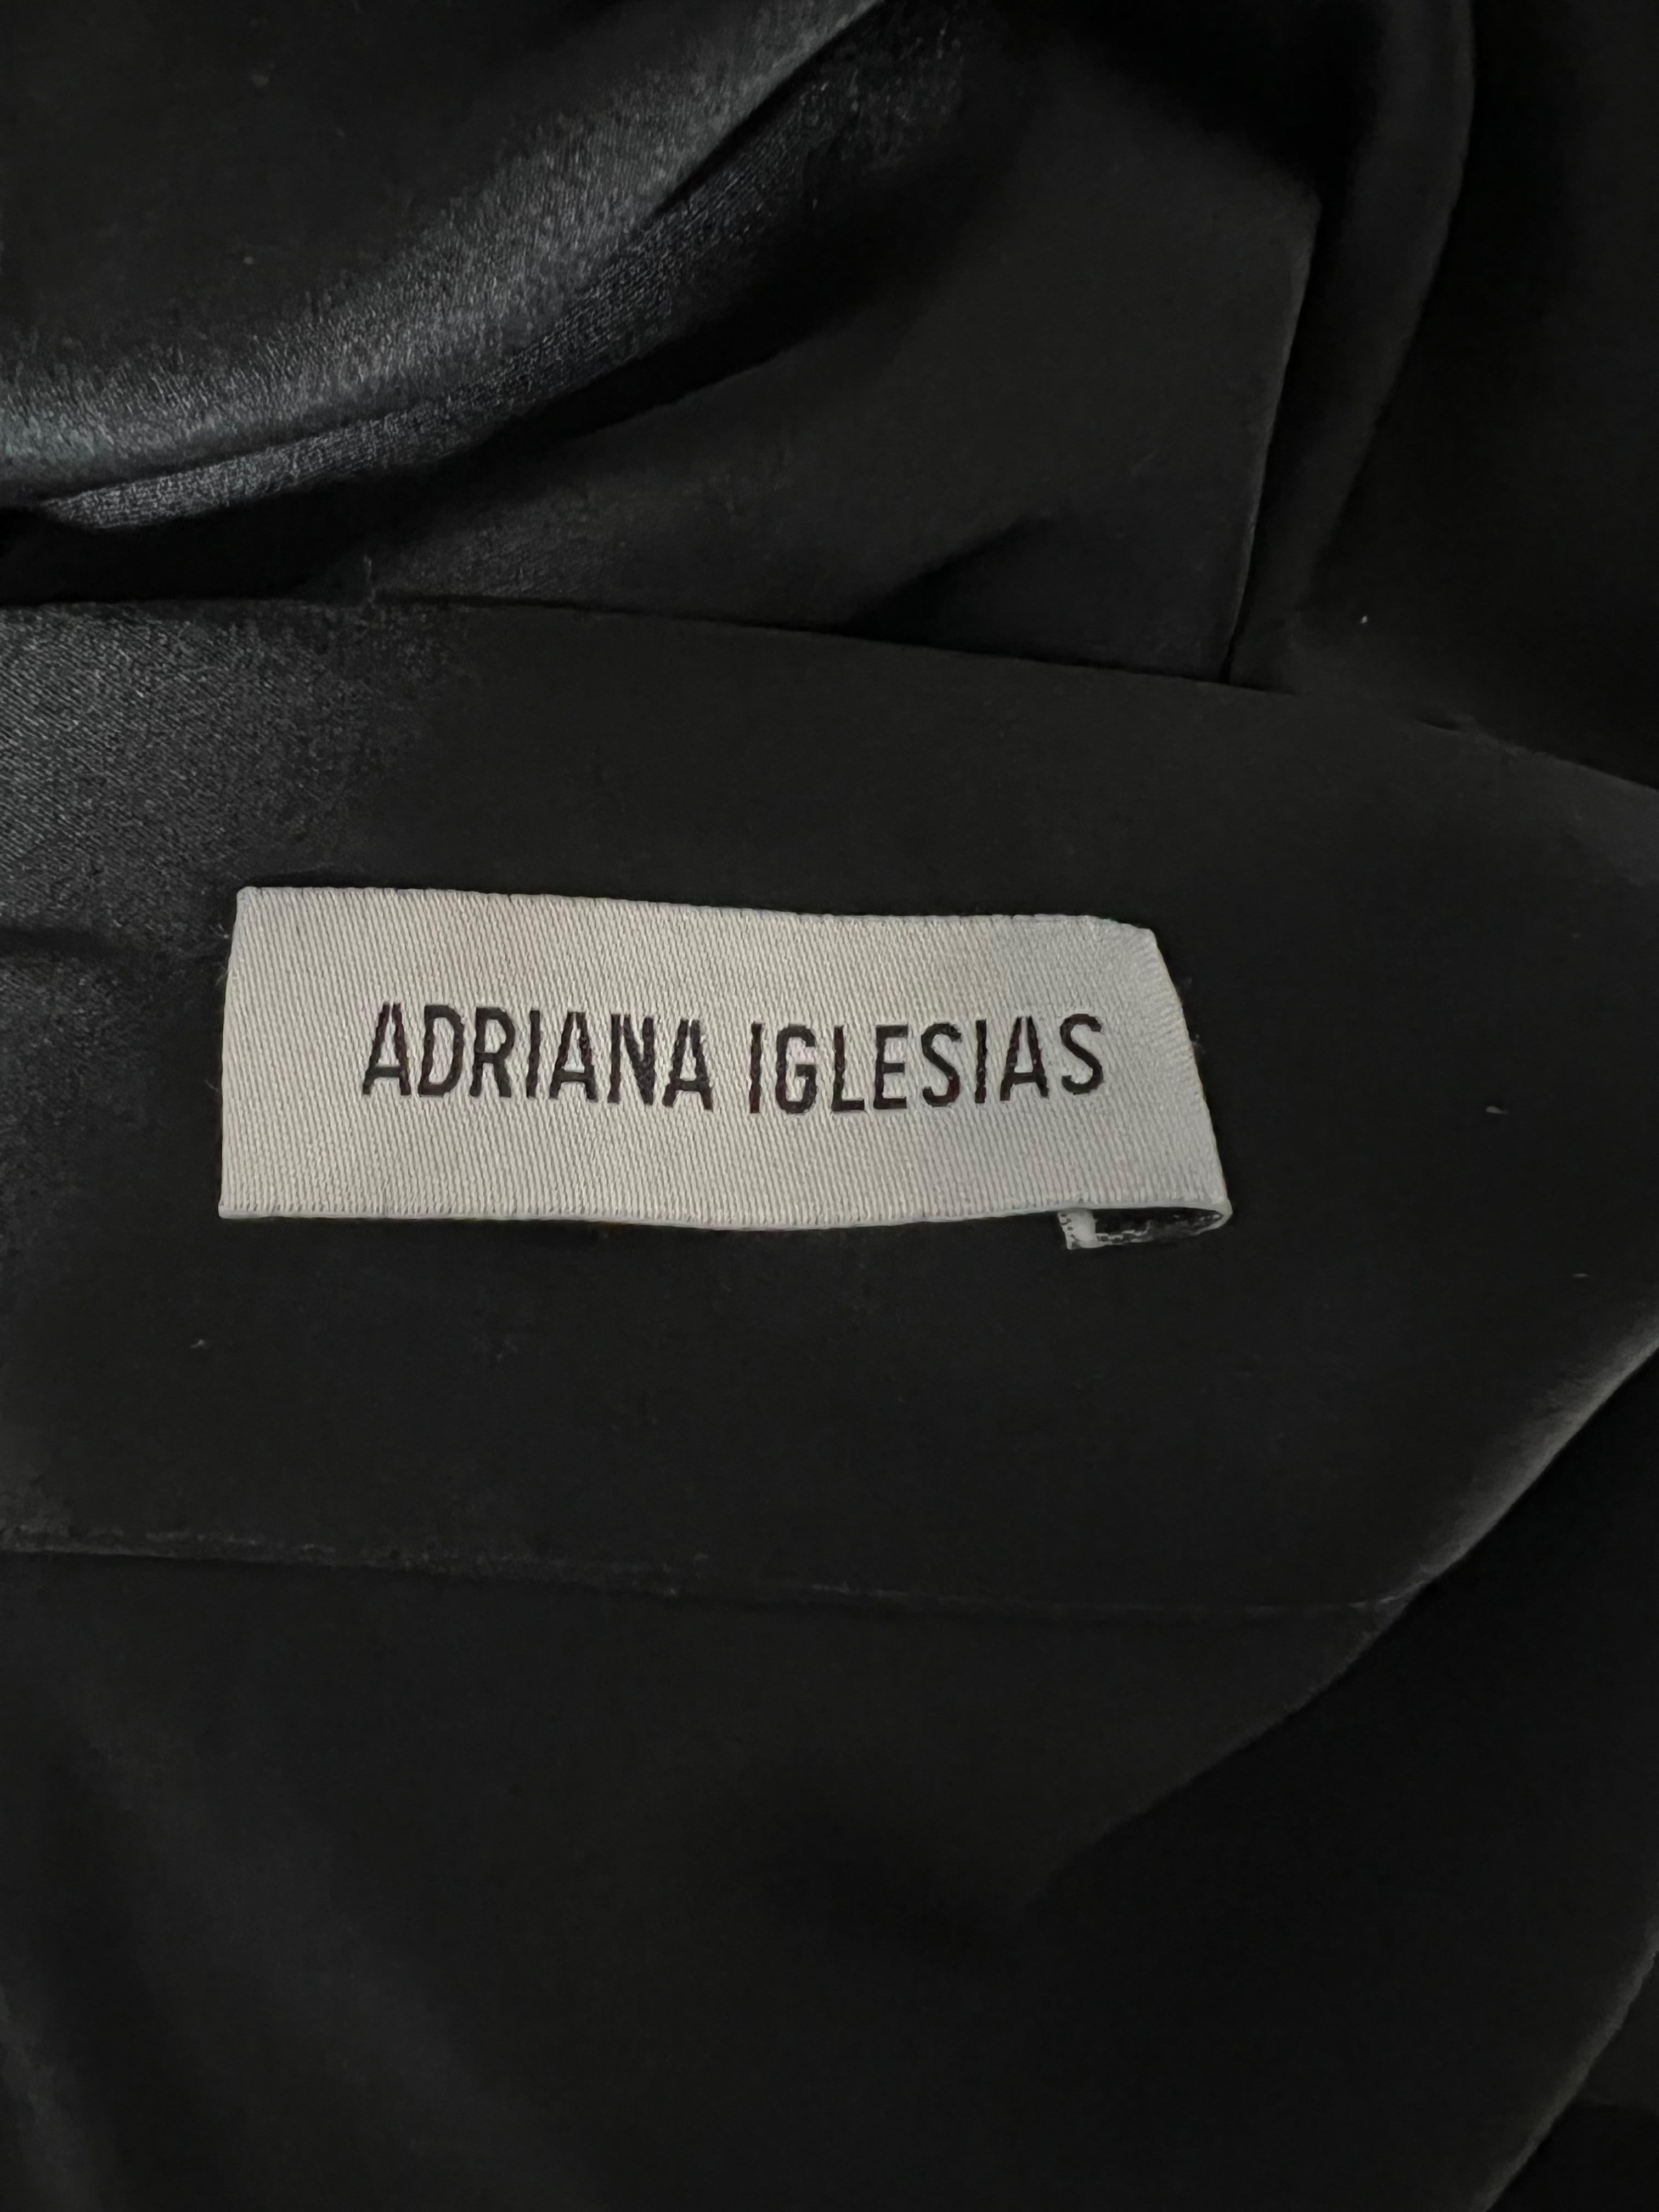 Adriana Iglesias Black Satin Trousers Pants For Sale 4